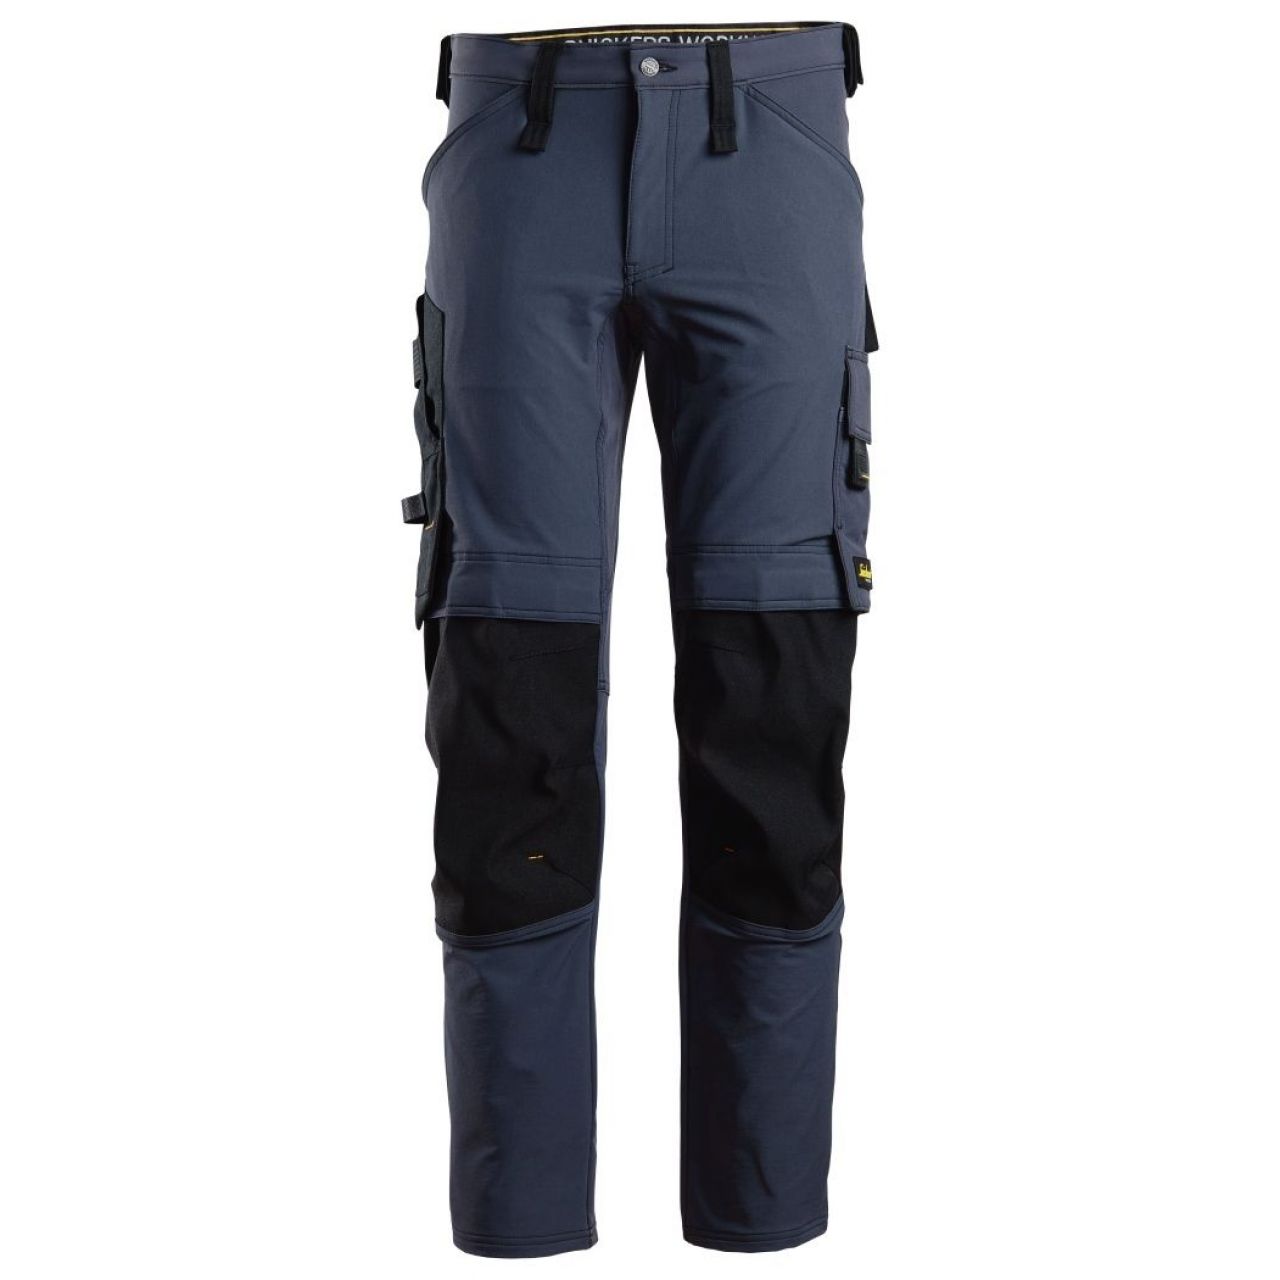 Pantalon elastico AllroundWork azul marino-negro talla 044